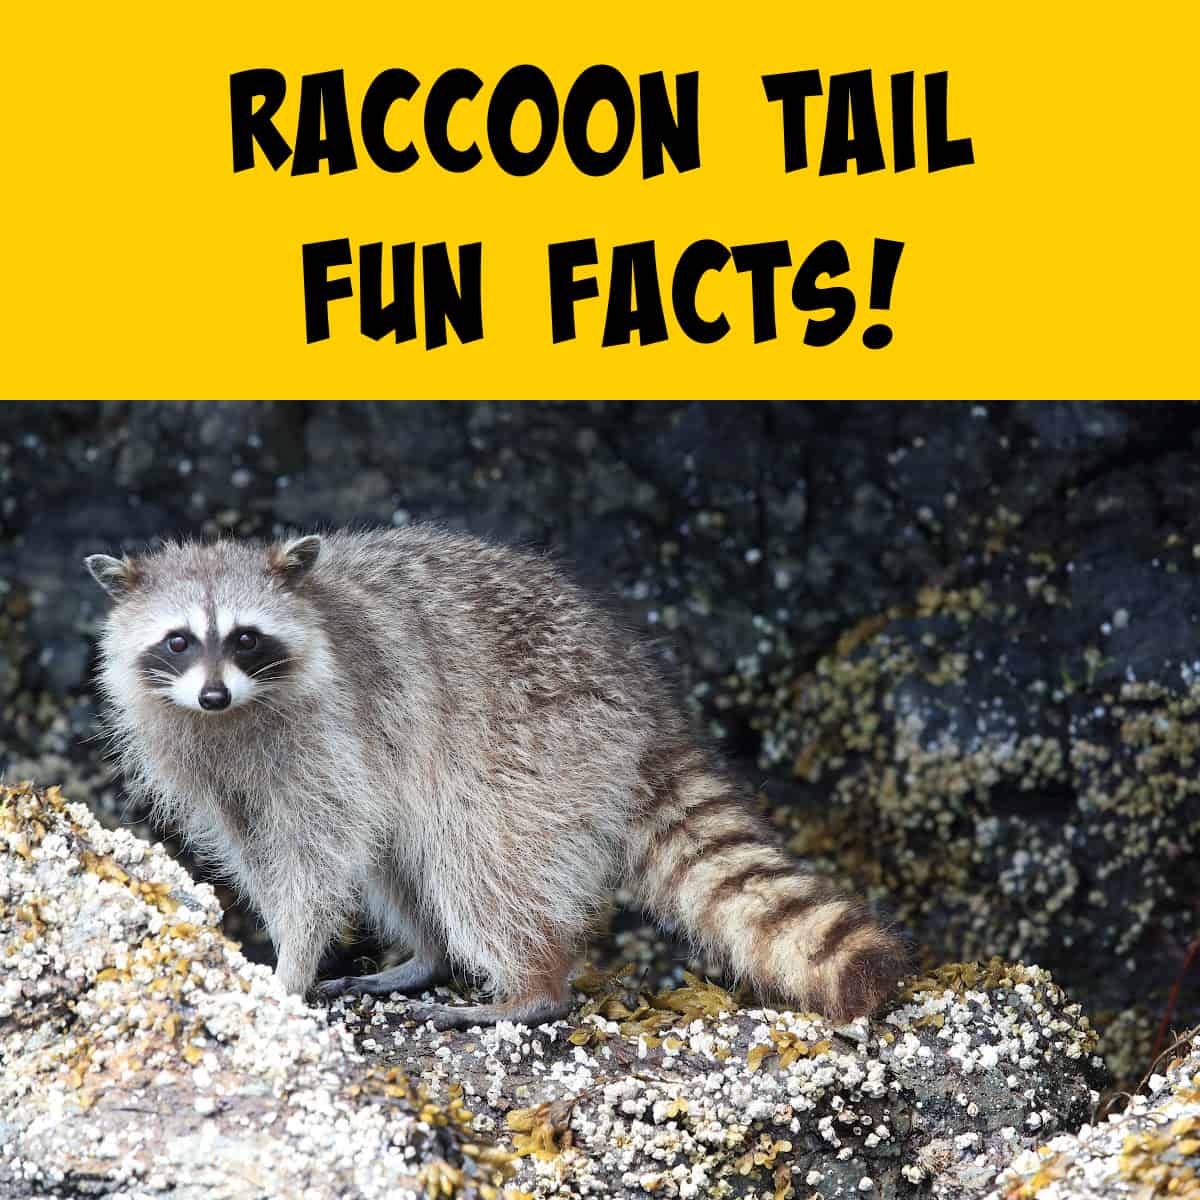 Raccoon with Distinctive Tail